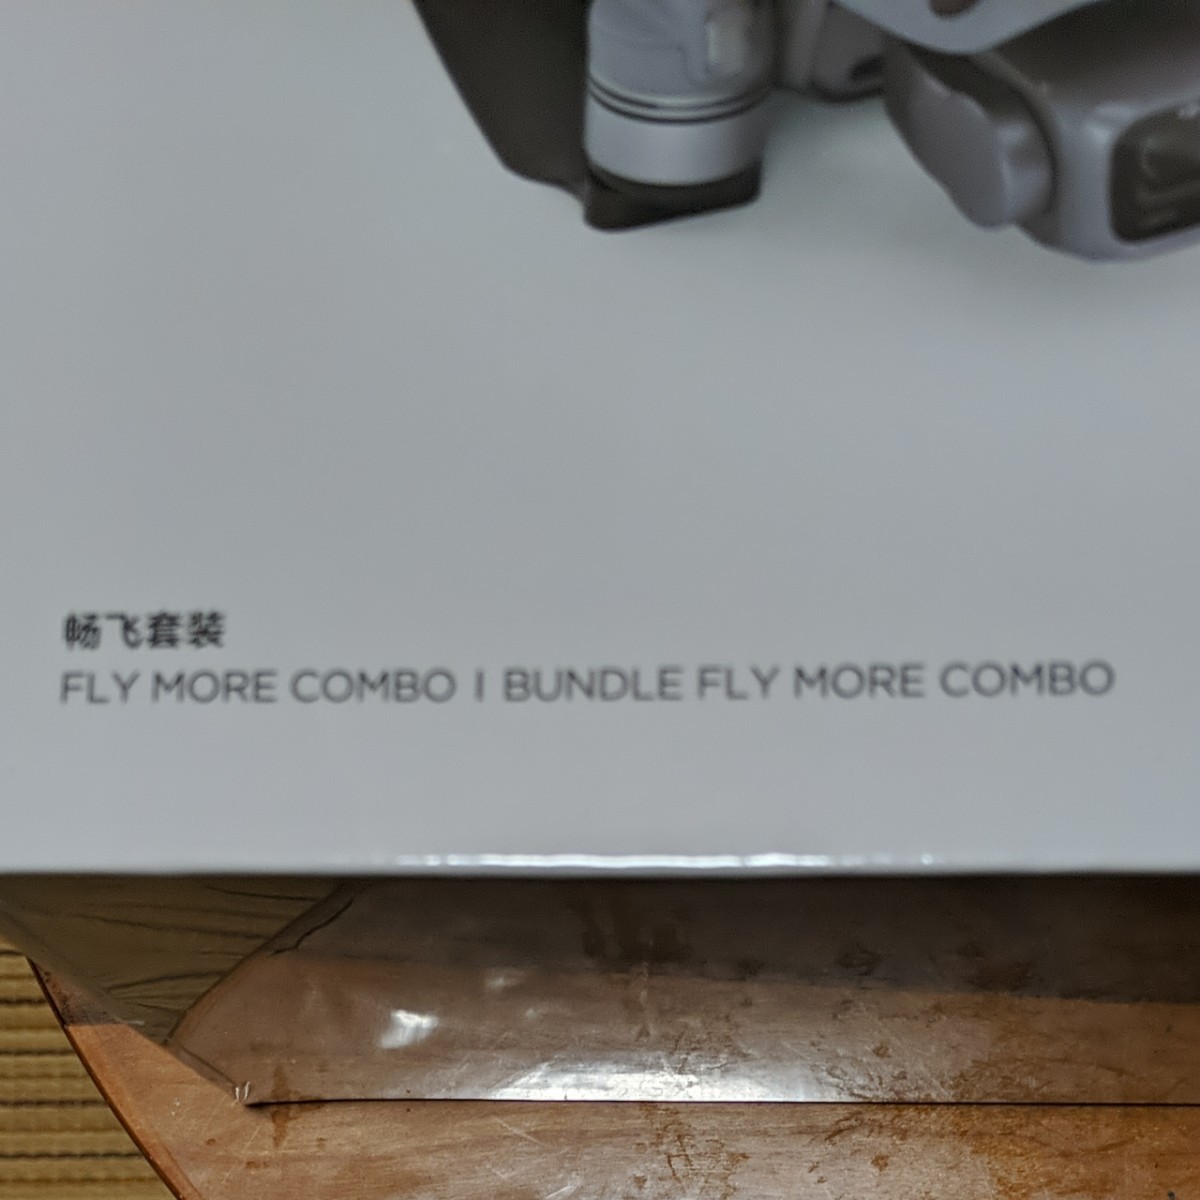 DJI AIR 2S FLY MORE COMBO 新品未開封品